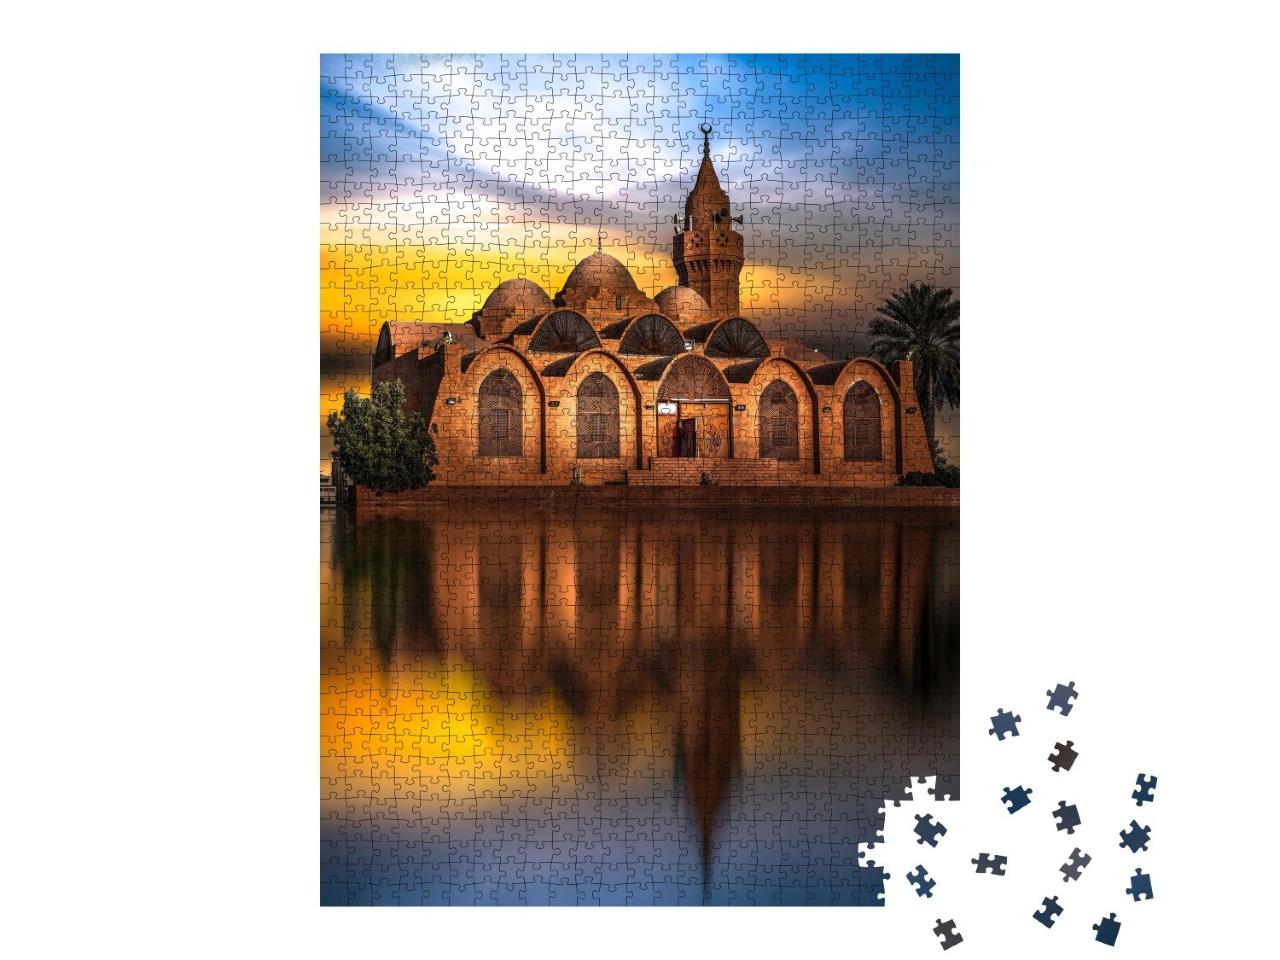 Puzzle de 1000 pièces « La mosquée Farsi à Djeddah, Arabie saoudite »